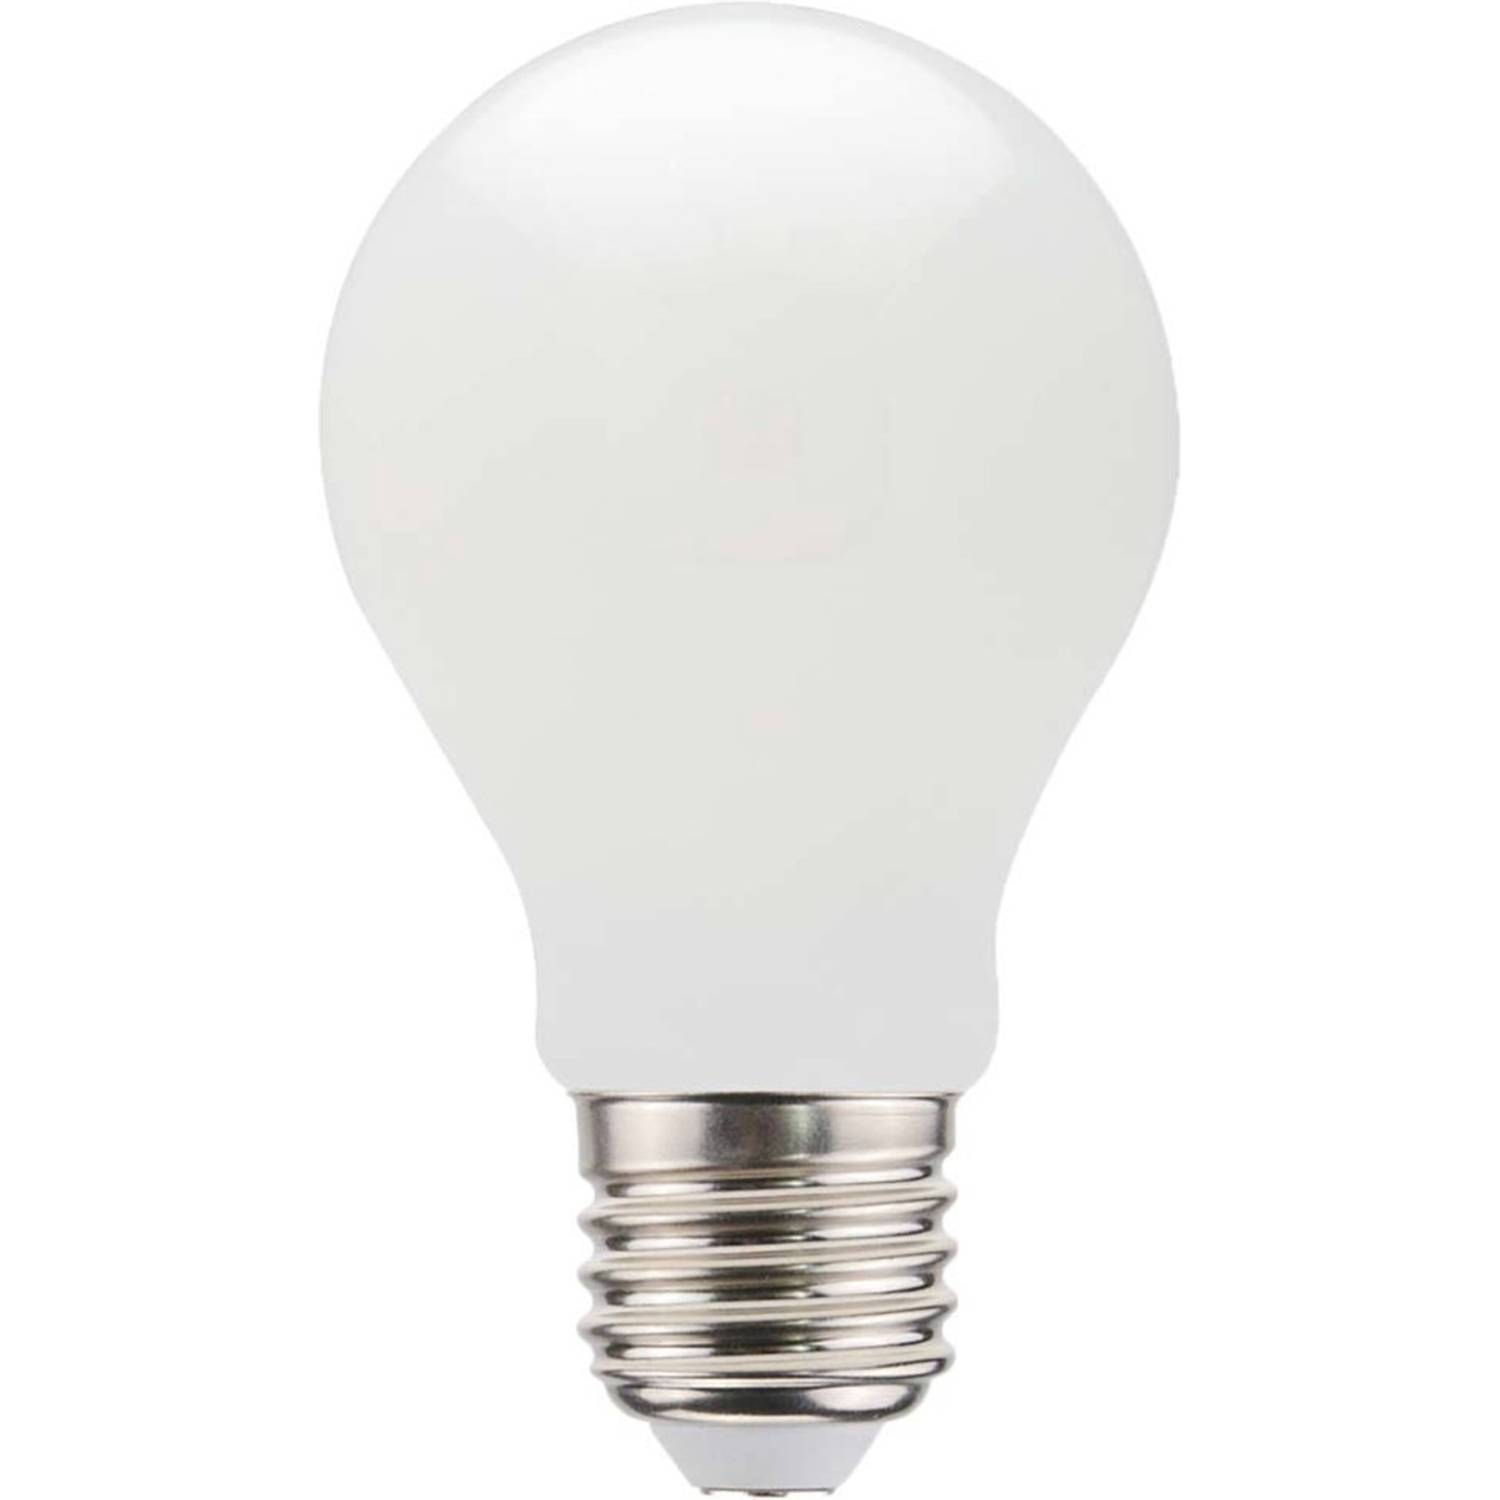 Proventa Decoratieve LED filament lamp met kleine E14 fitting - model Bol - ‚åÄ 45 mm - 1 led lamp